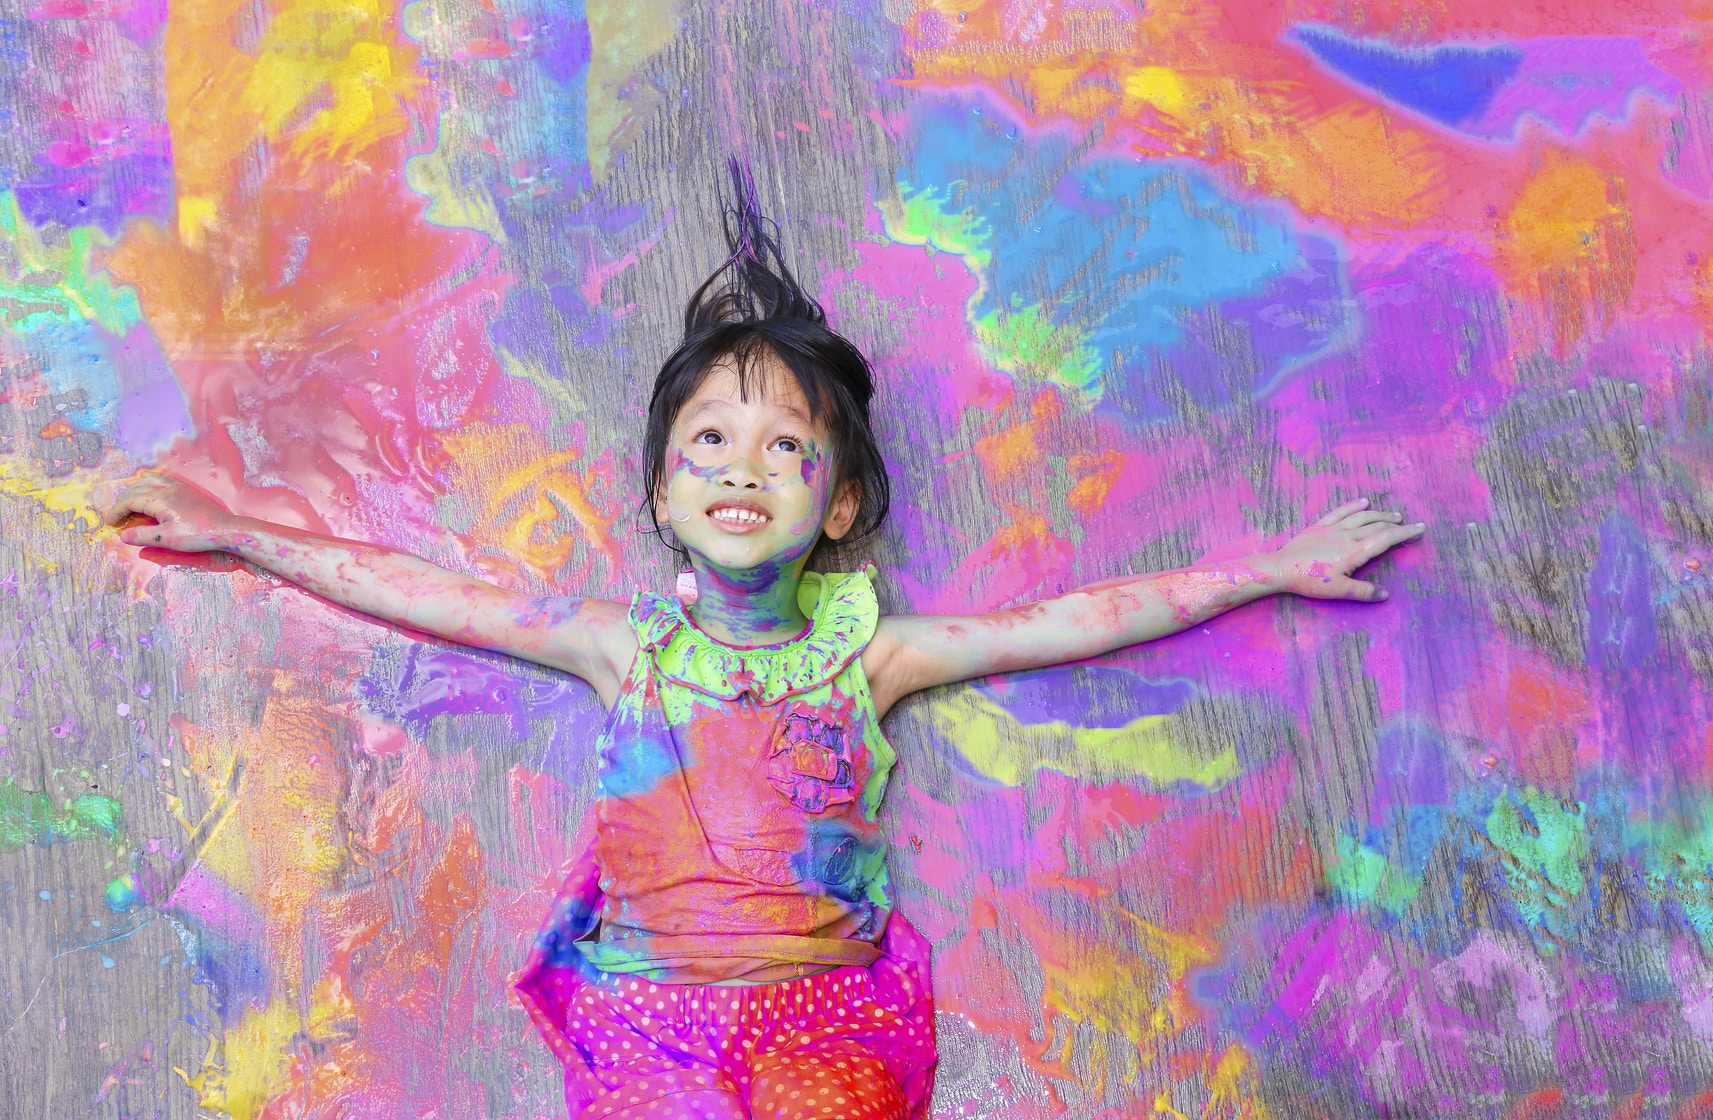 girl covered in paint lying on splattered paint background